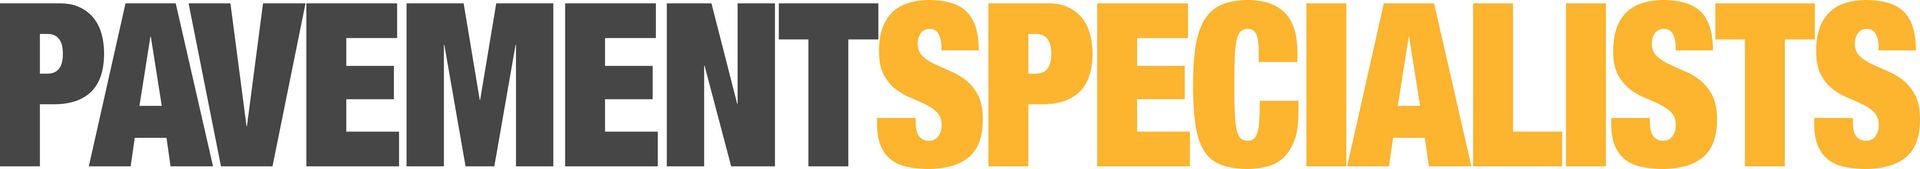 Pavement Specialists - Logo